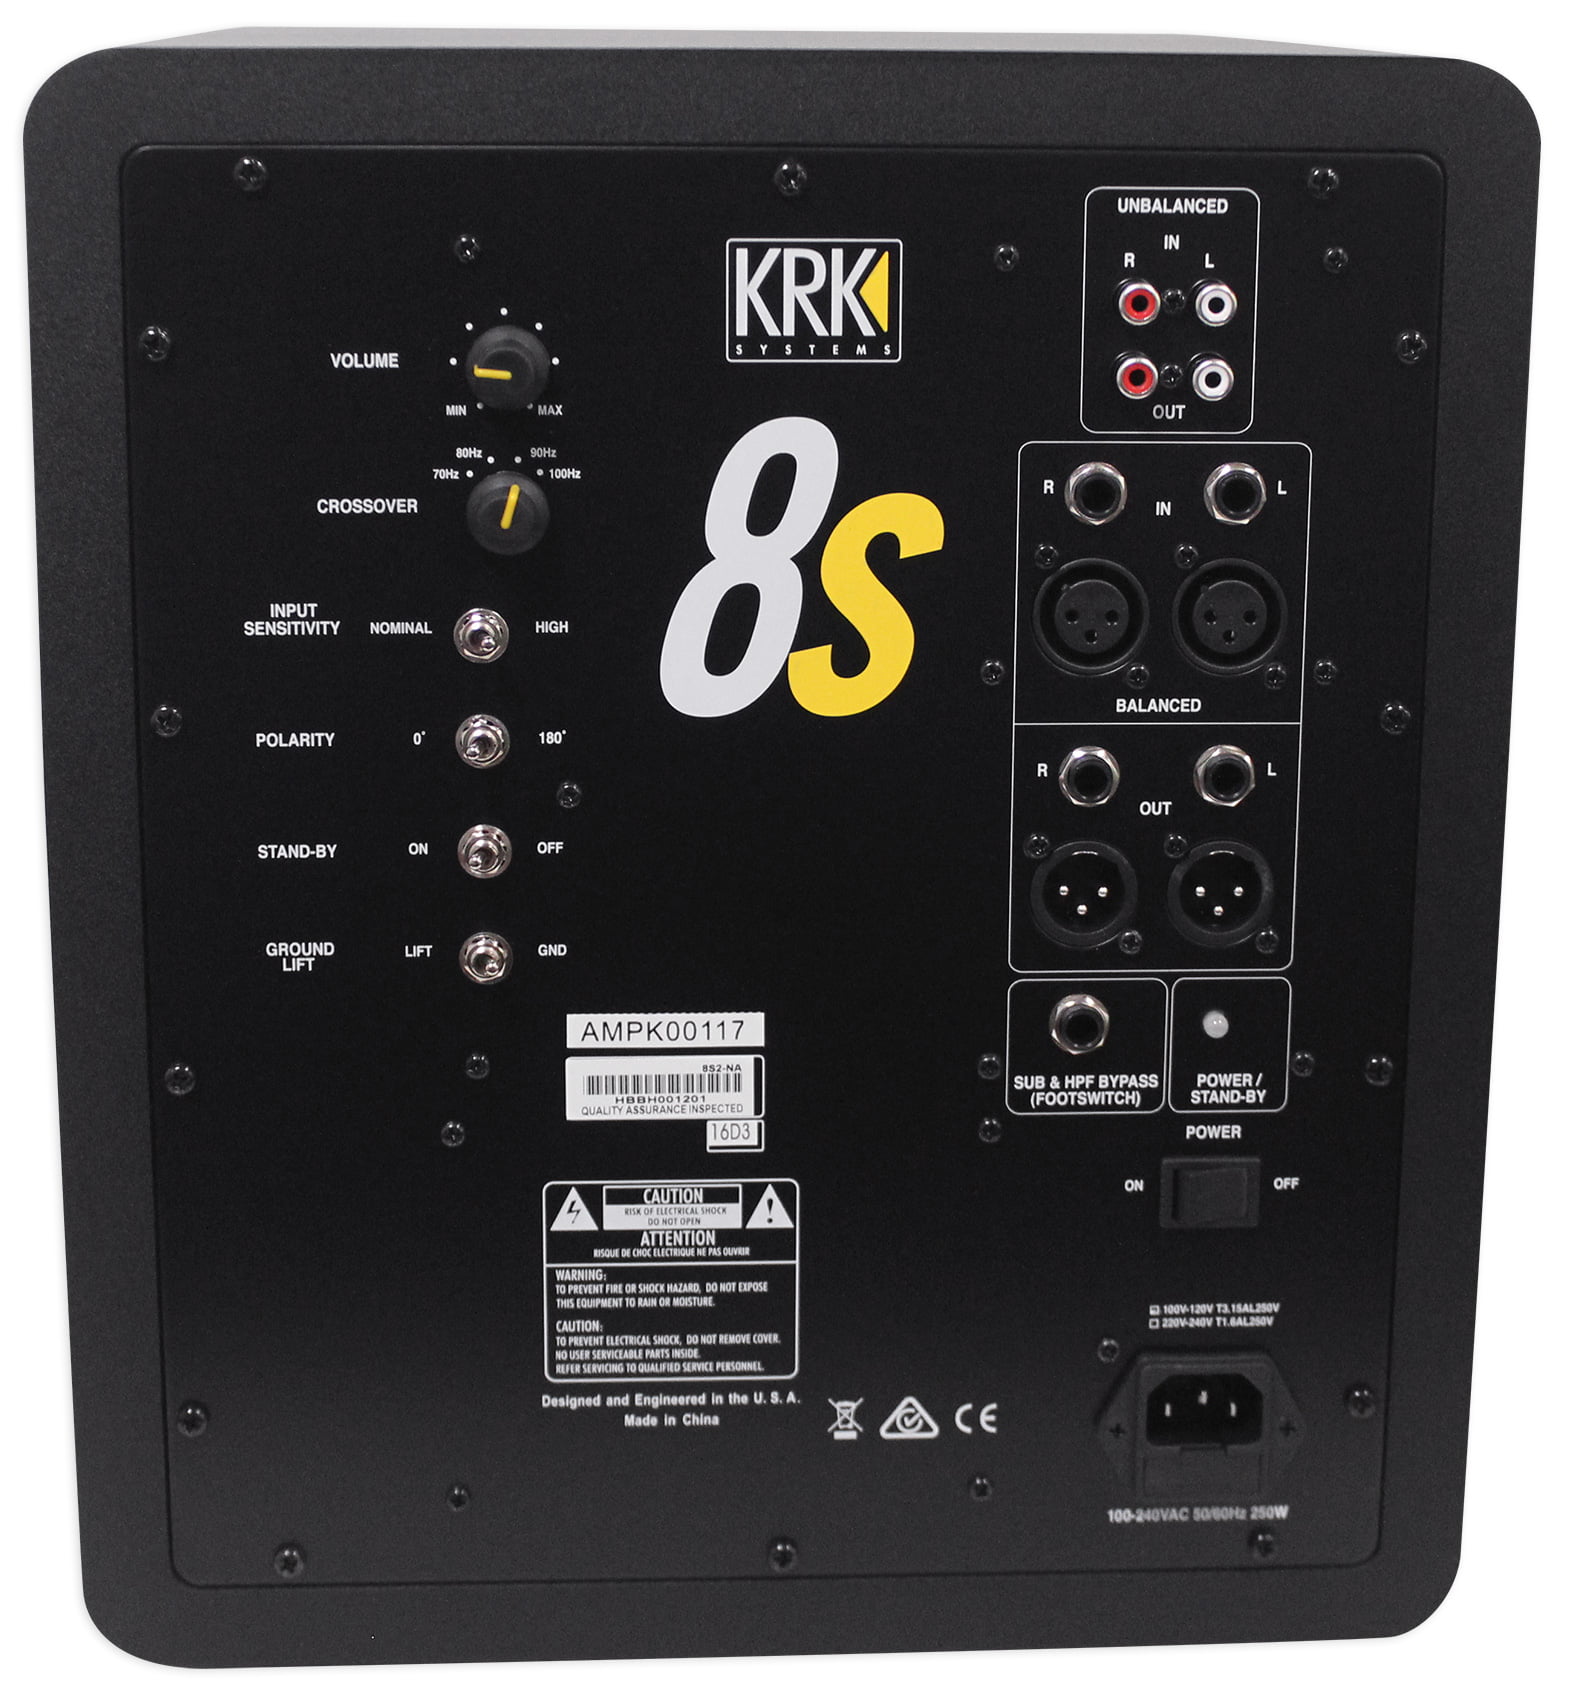 KRK 8S v2 109w Active Studio Subwoofer D Amp+MDF Enclosure+Headphones - Walmart.com